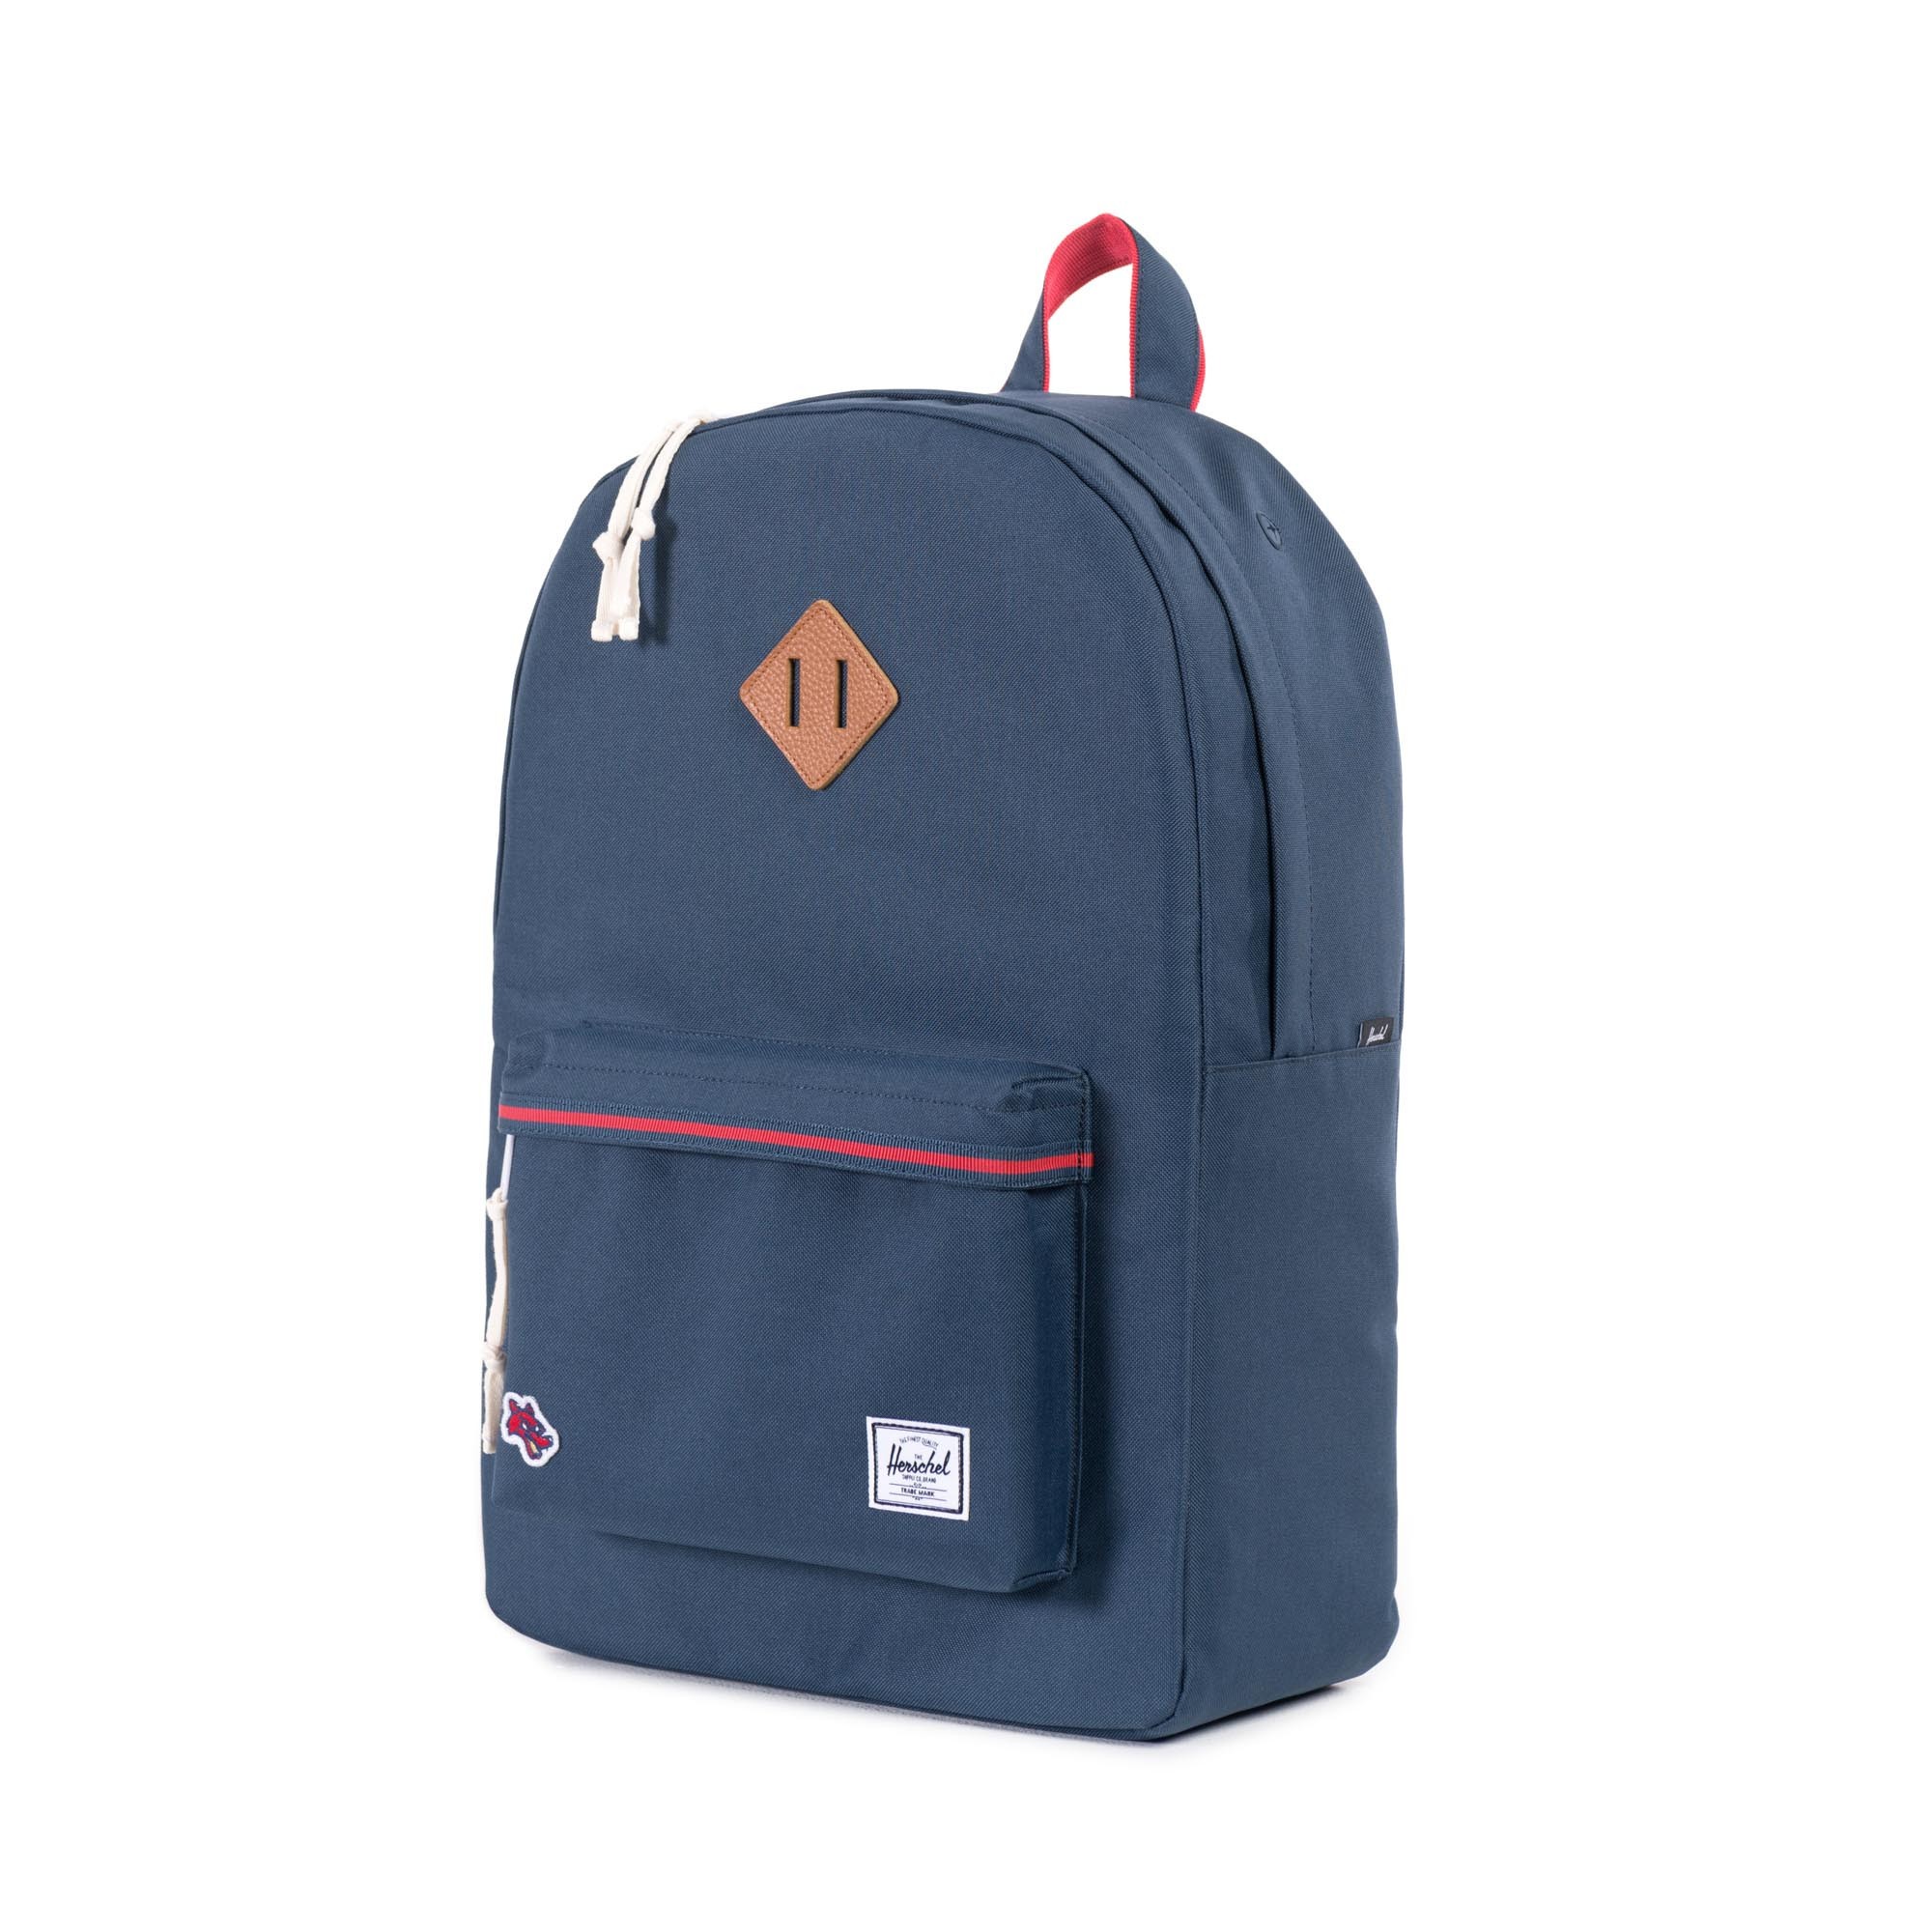 Herschel Backpack Travel. Herschel Classic Backpack, Ash Rose, XL 30.0L.